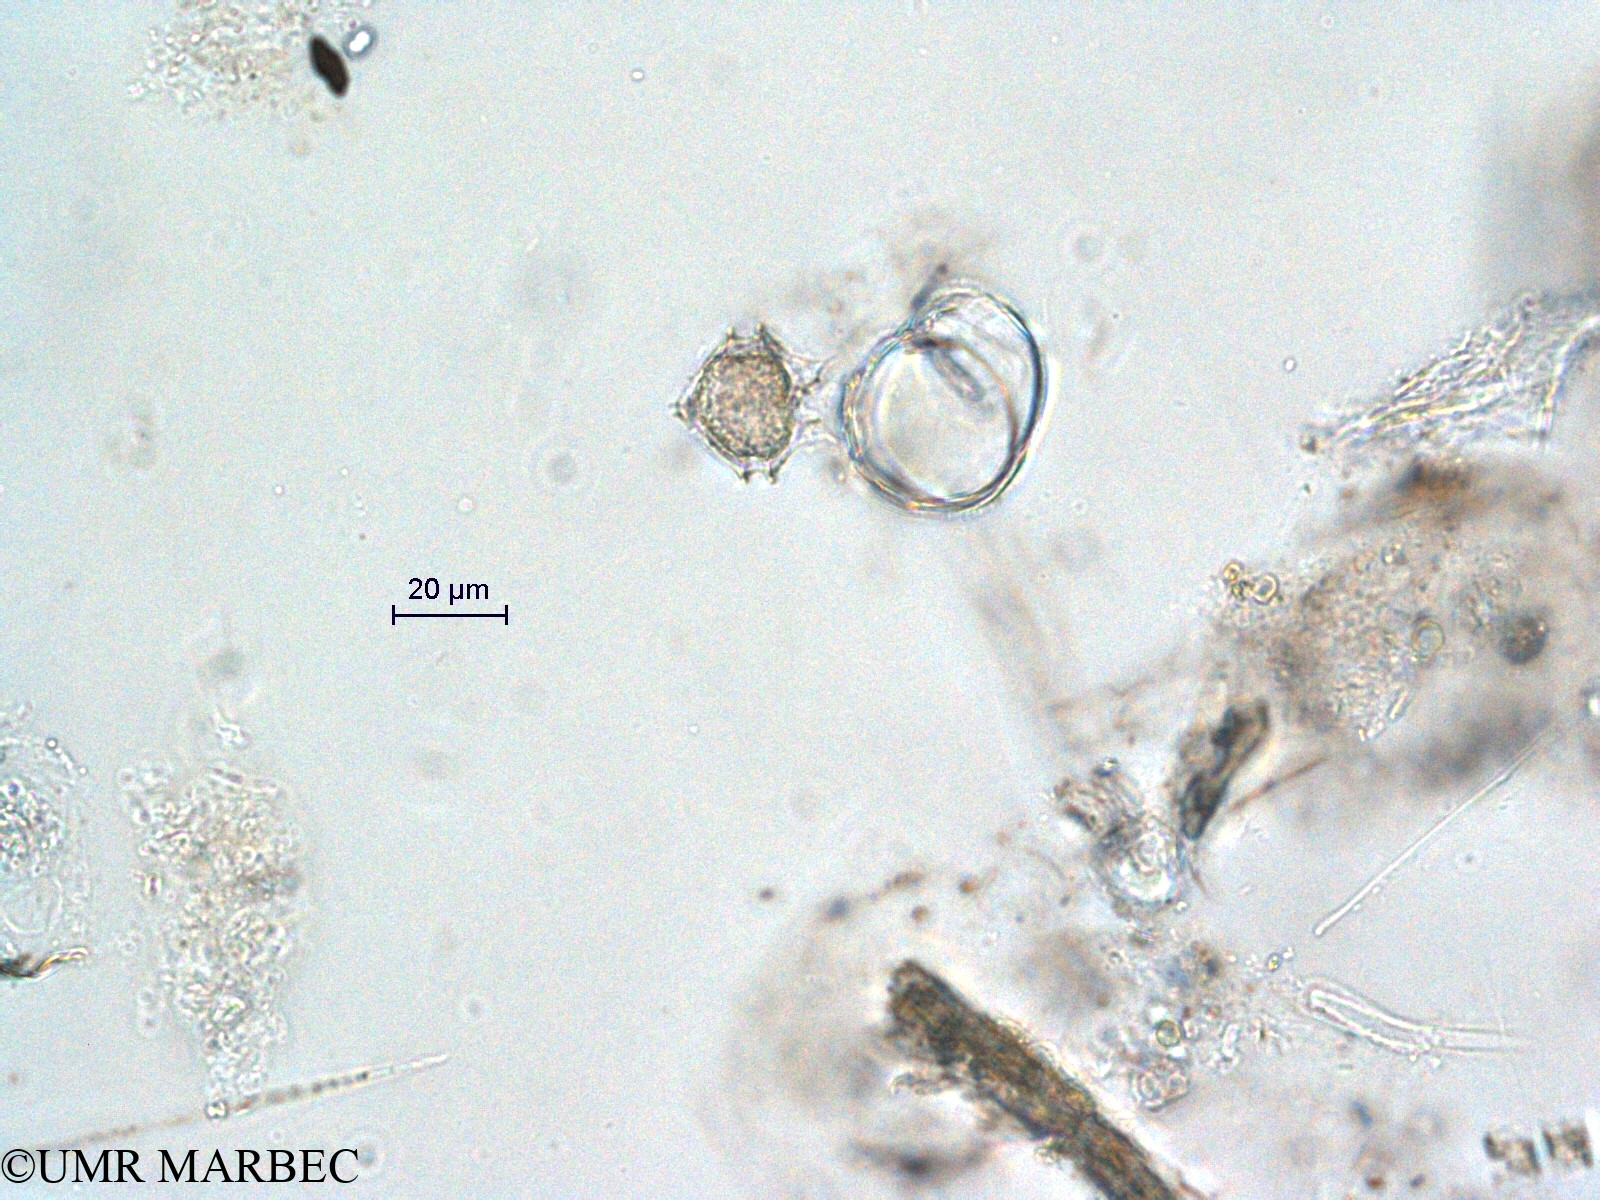 phyto/Scattered_Islands/all/COMMA April 2011/Protoperidinium sp24 (ancien Protoperidinium sp10-6)(copy).jpg